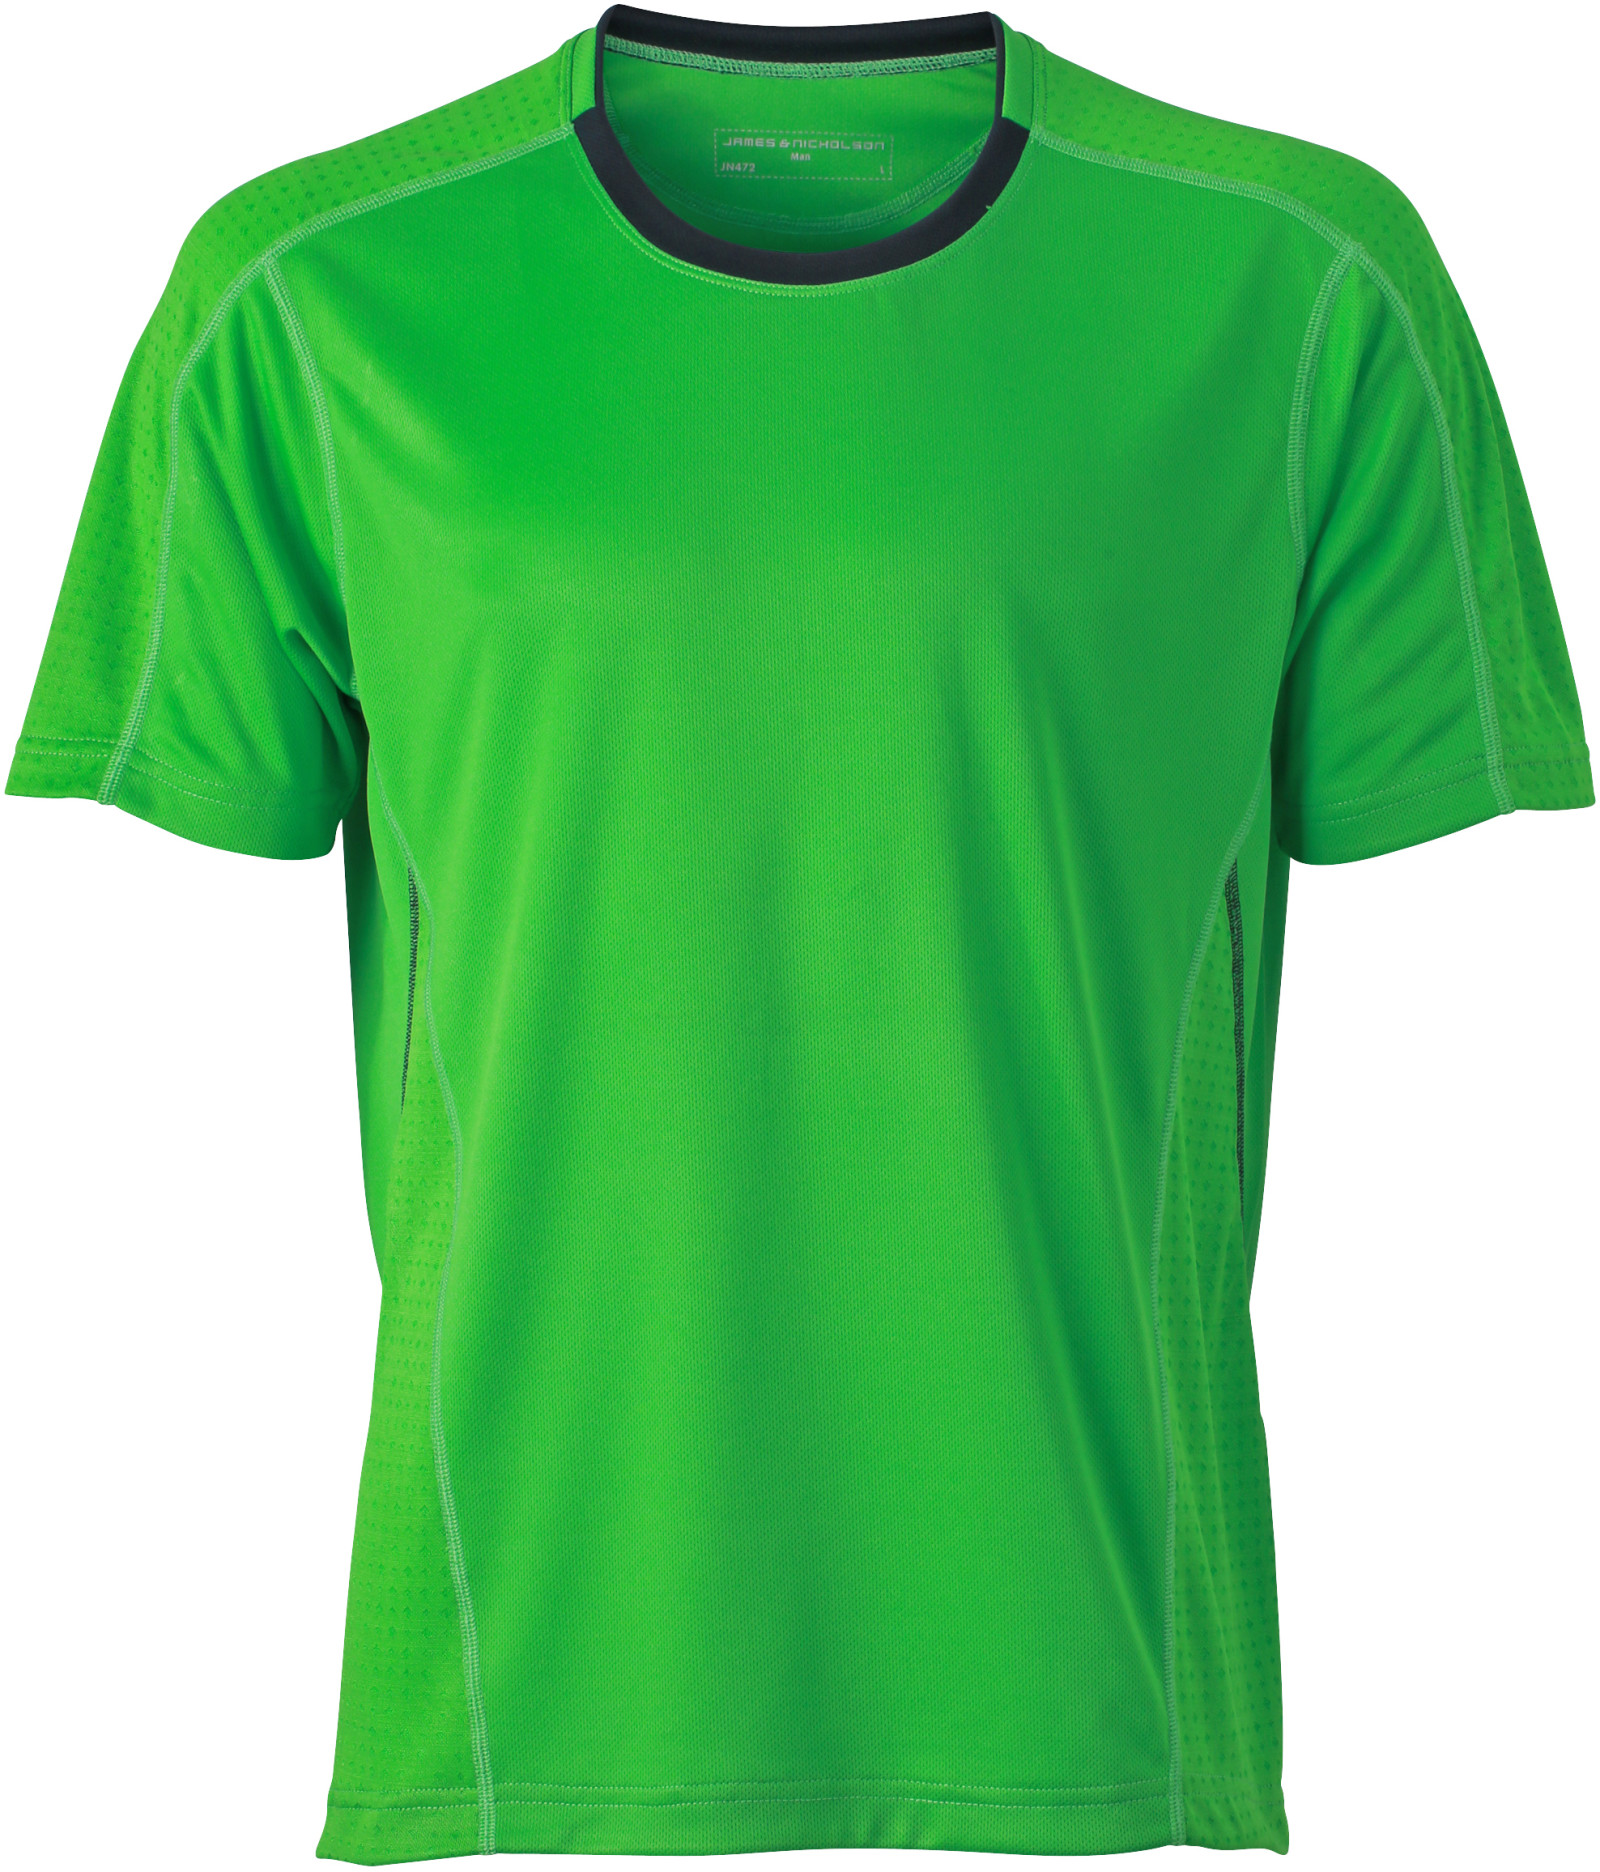 Дешевле майка. Серо зеленая футболка мужская. Zara майка зеленый. Тенниска дешевая.